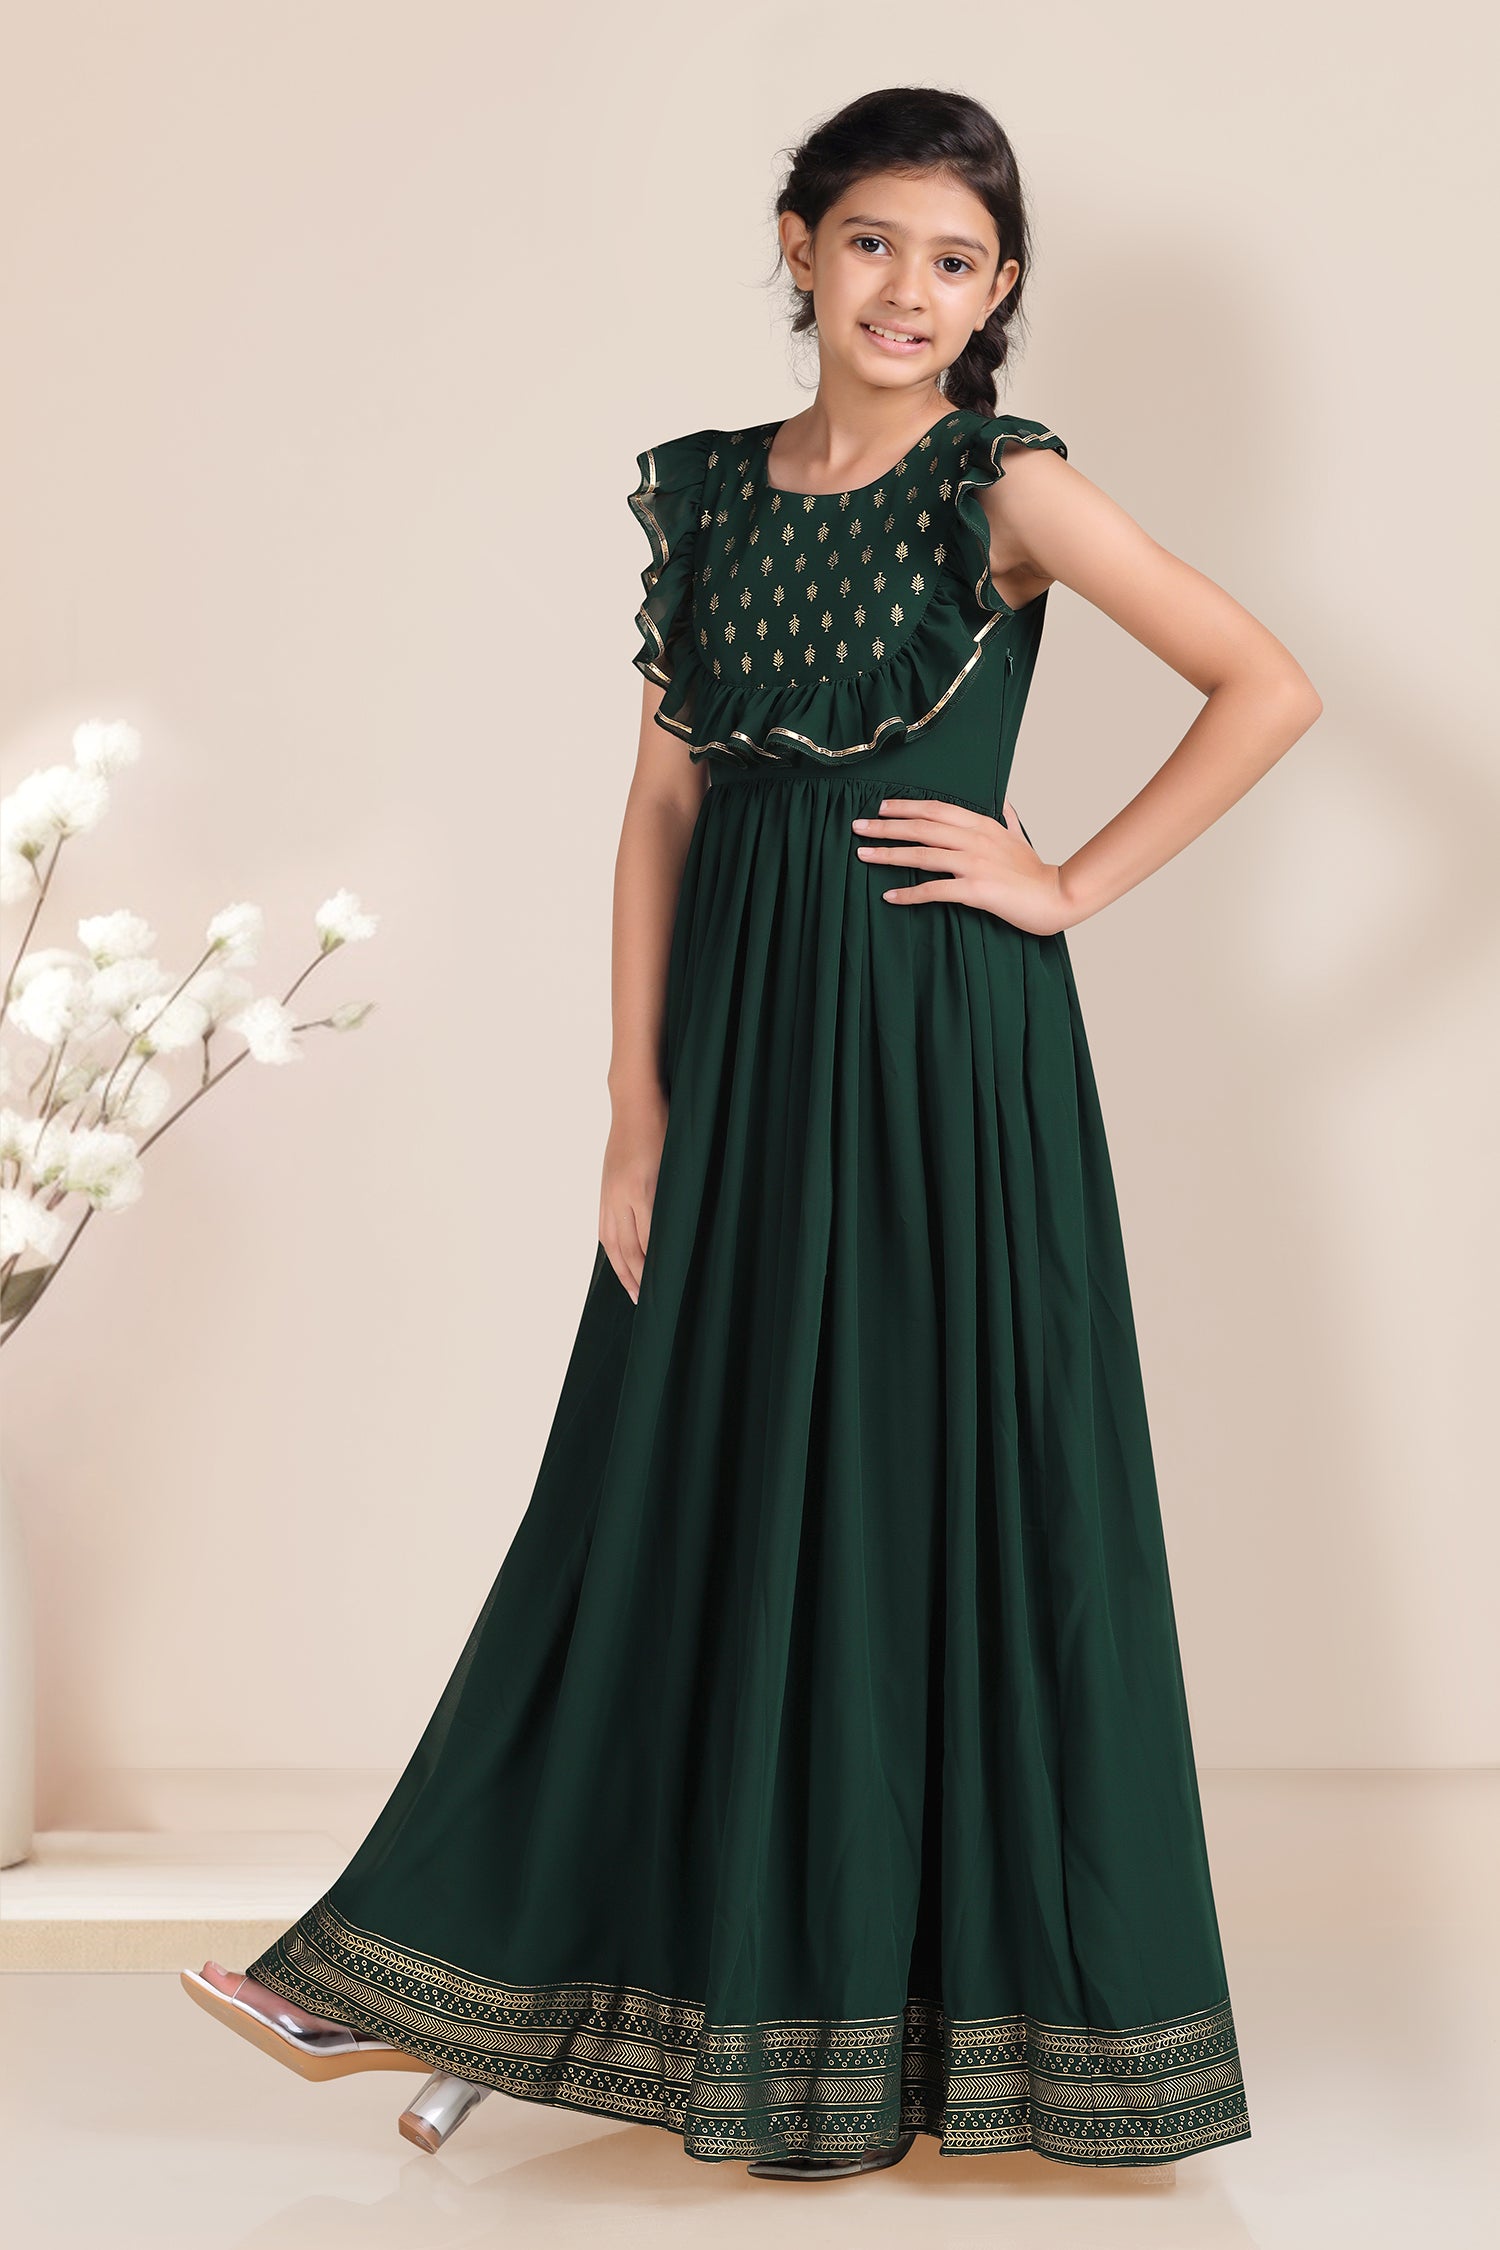 Buy Emerald Green Dress Princess Dress Flower Girl Dress Wedding Dress Lace  Dress Tulle Dress Tutu Dress Baby Dress Toddler Dress Girls Dress Online in  India - Etsy